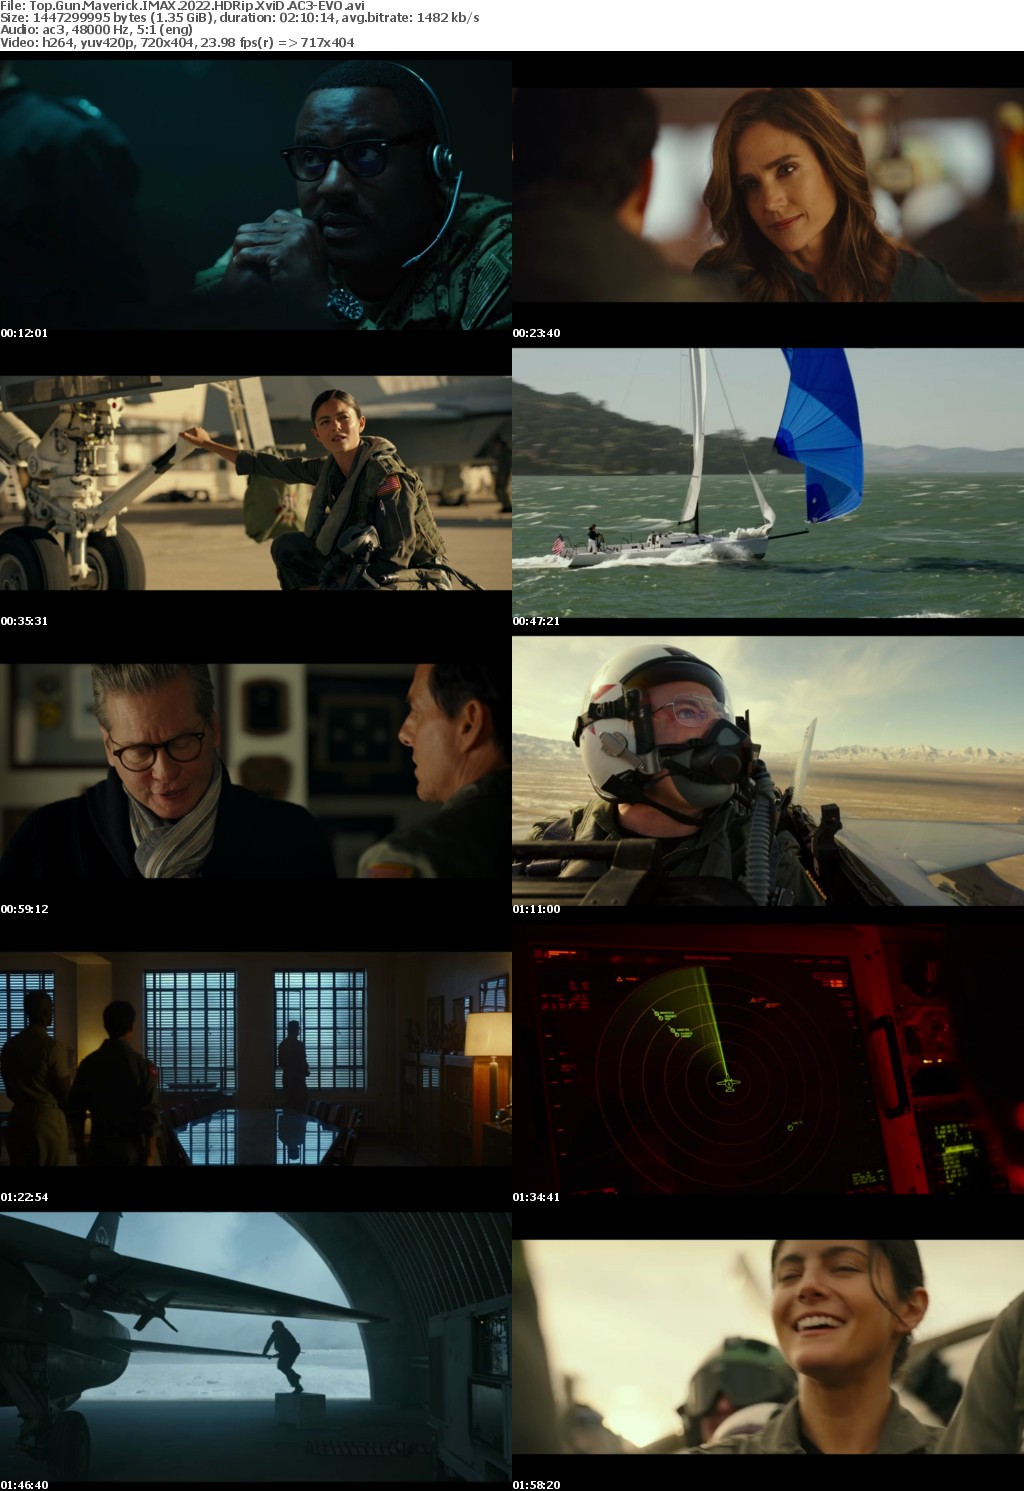 Top Gun Maverick IMAX 2022 HDRip XviD AC3-EVO